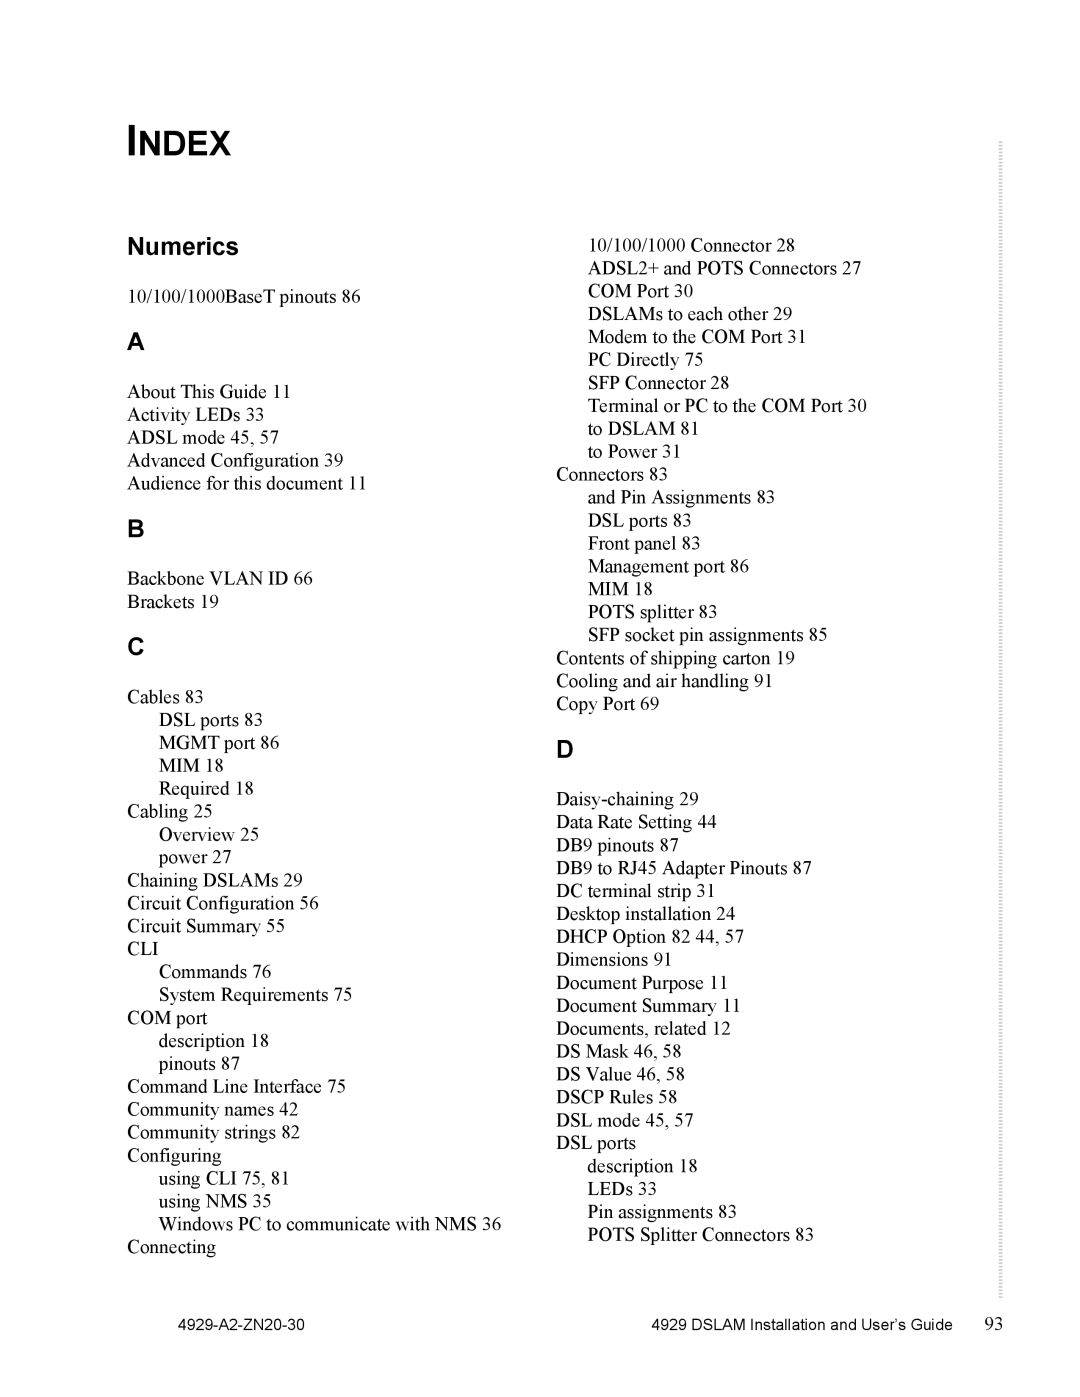 Zhone Technologies 4929 DSLAM manual Index, Numerics, Cli 